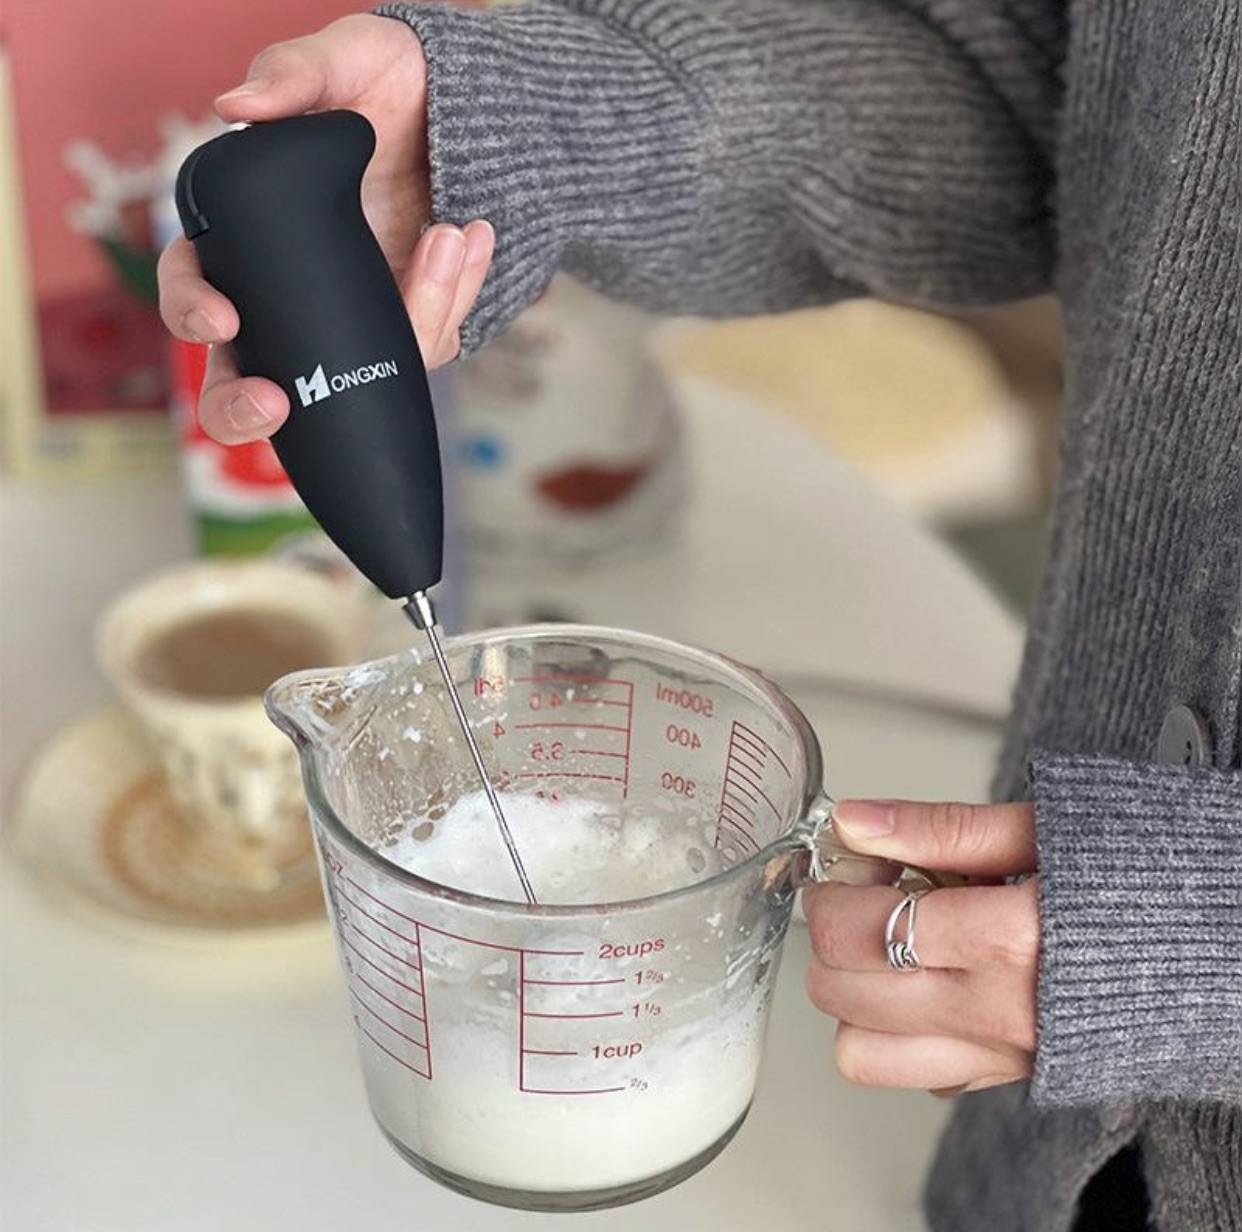 Cheap Automatic Egg Beater Milk Beater Coffee Mixer Kitchen Tools Mini  Electric Household Milk Beater Mixer Creative Cake Baking Tools